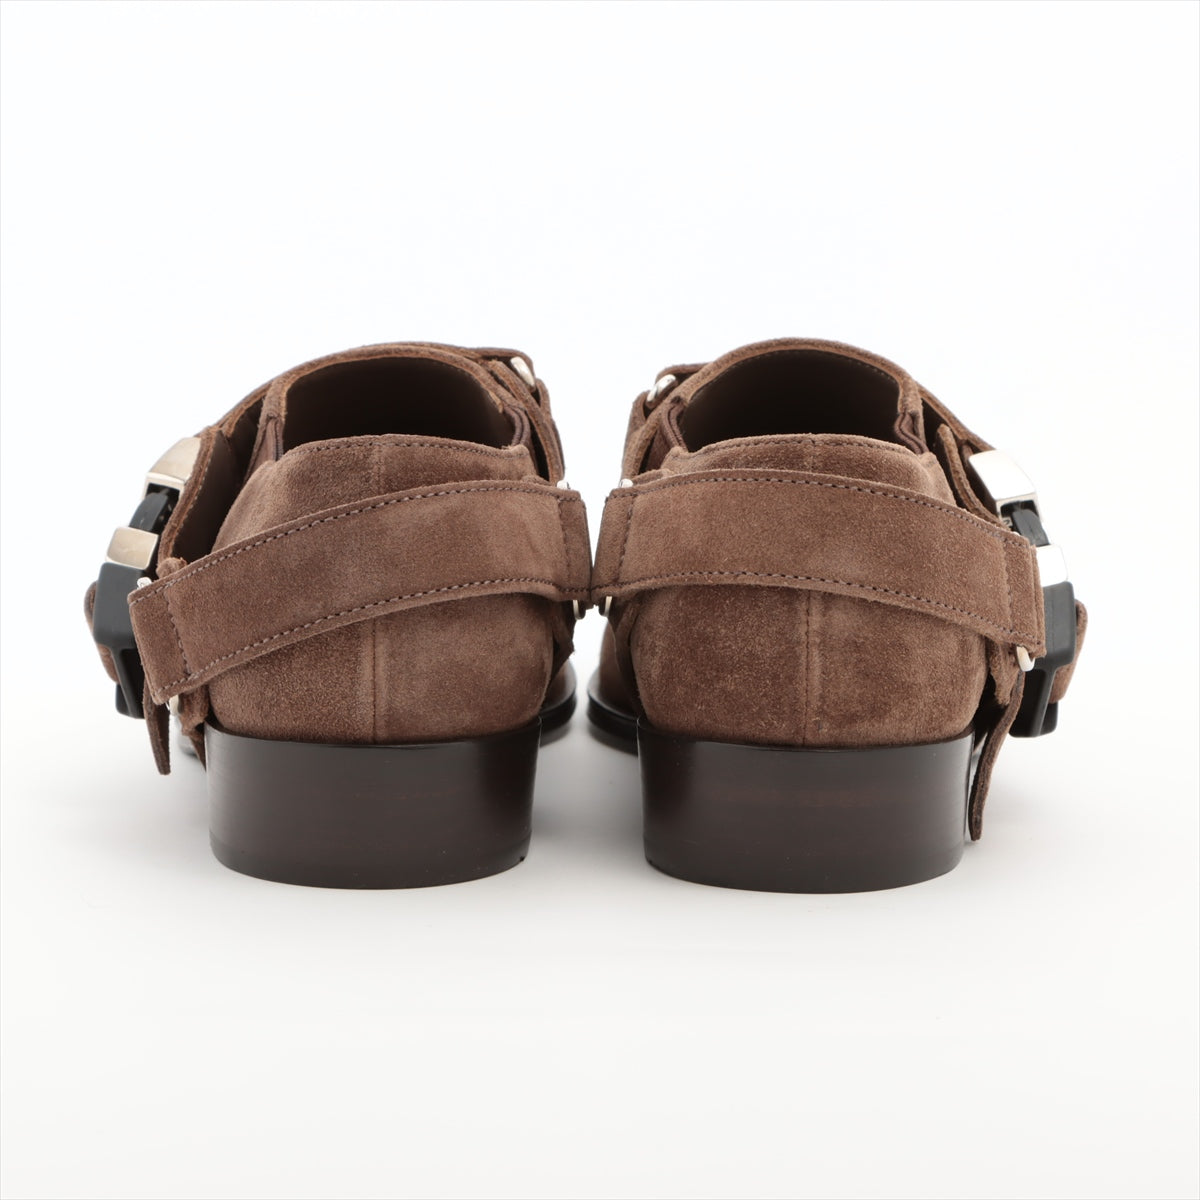 Prada Suede Leather shoes 35 Ladies' Brown 1T304L